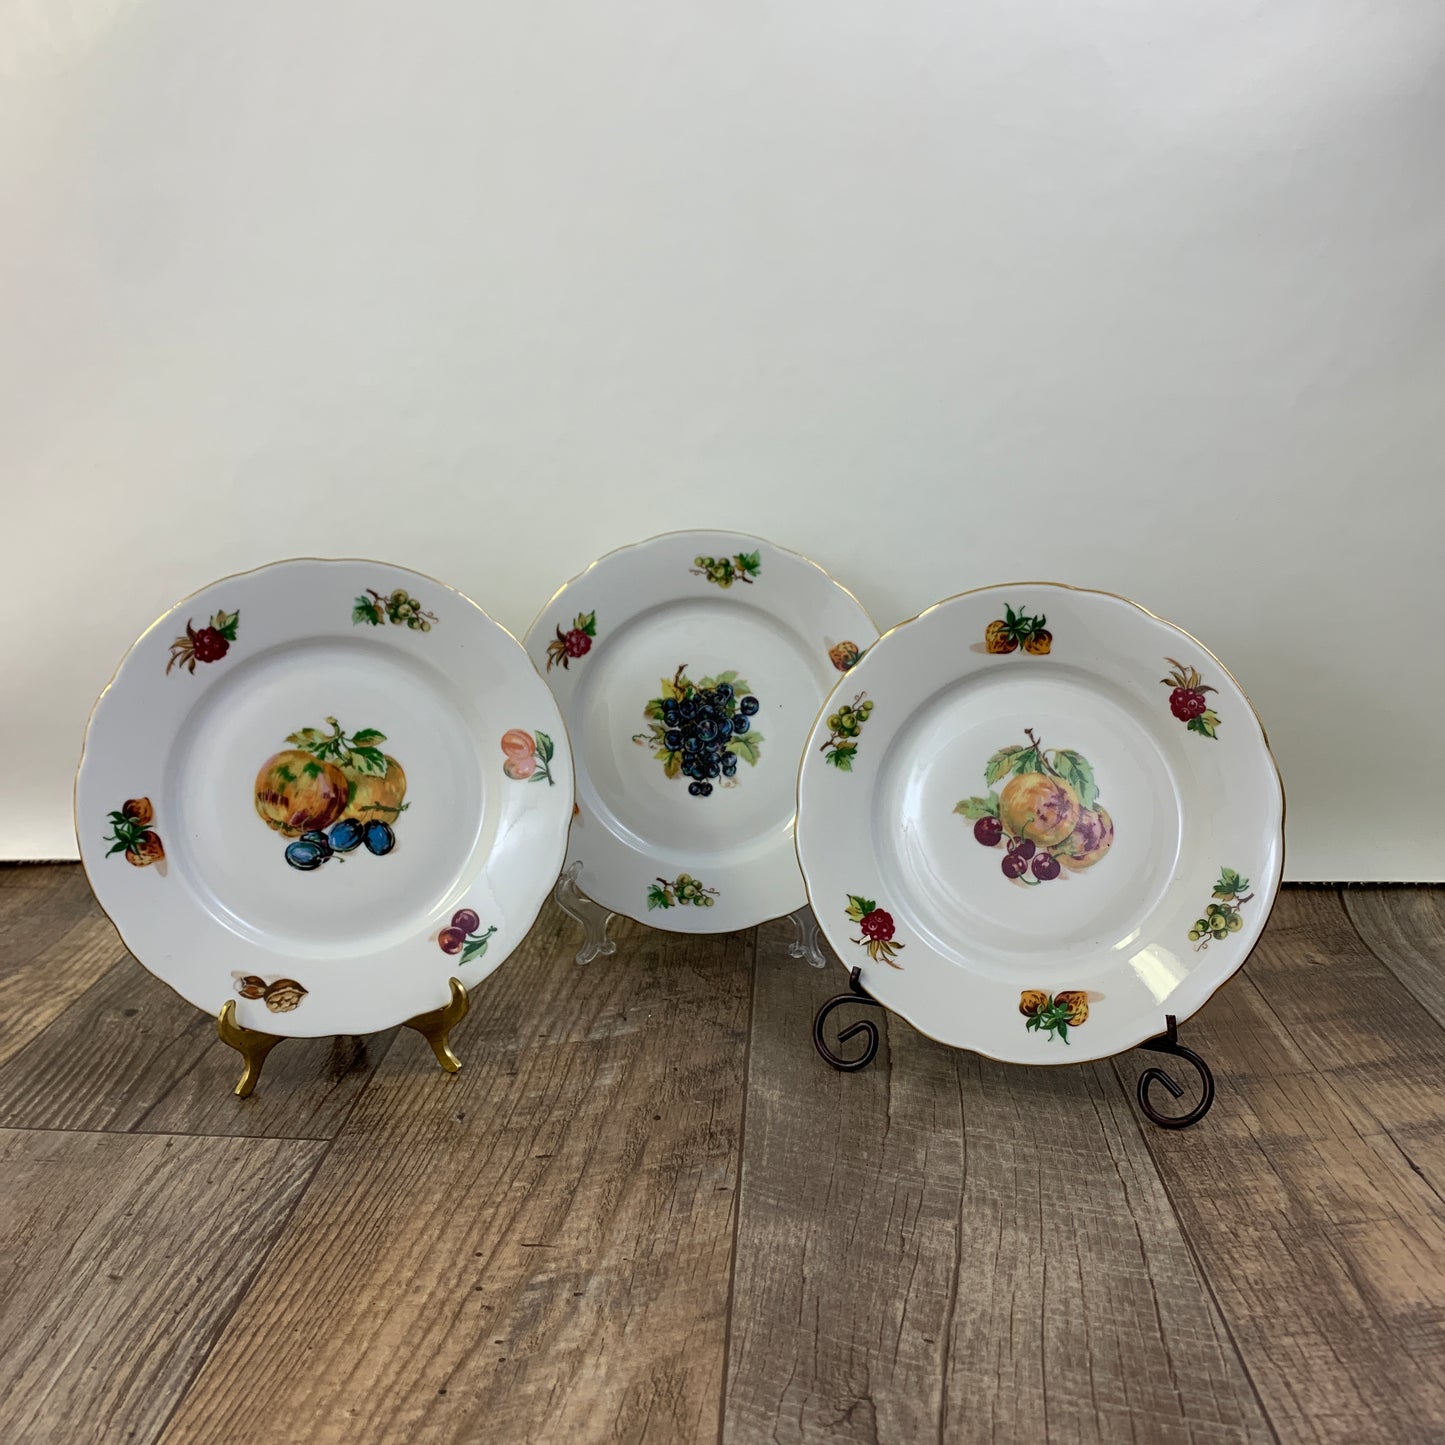 Set of 3 Vintage China Plates, Salad Plates, Dessert Plates Made in Czechoslovakia